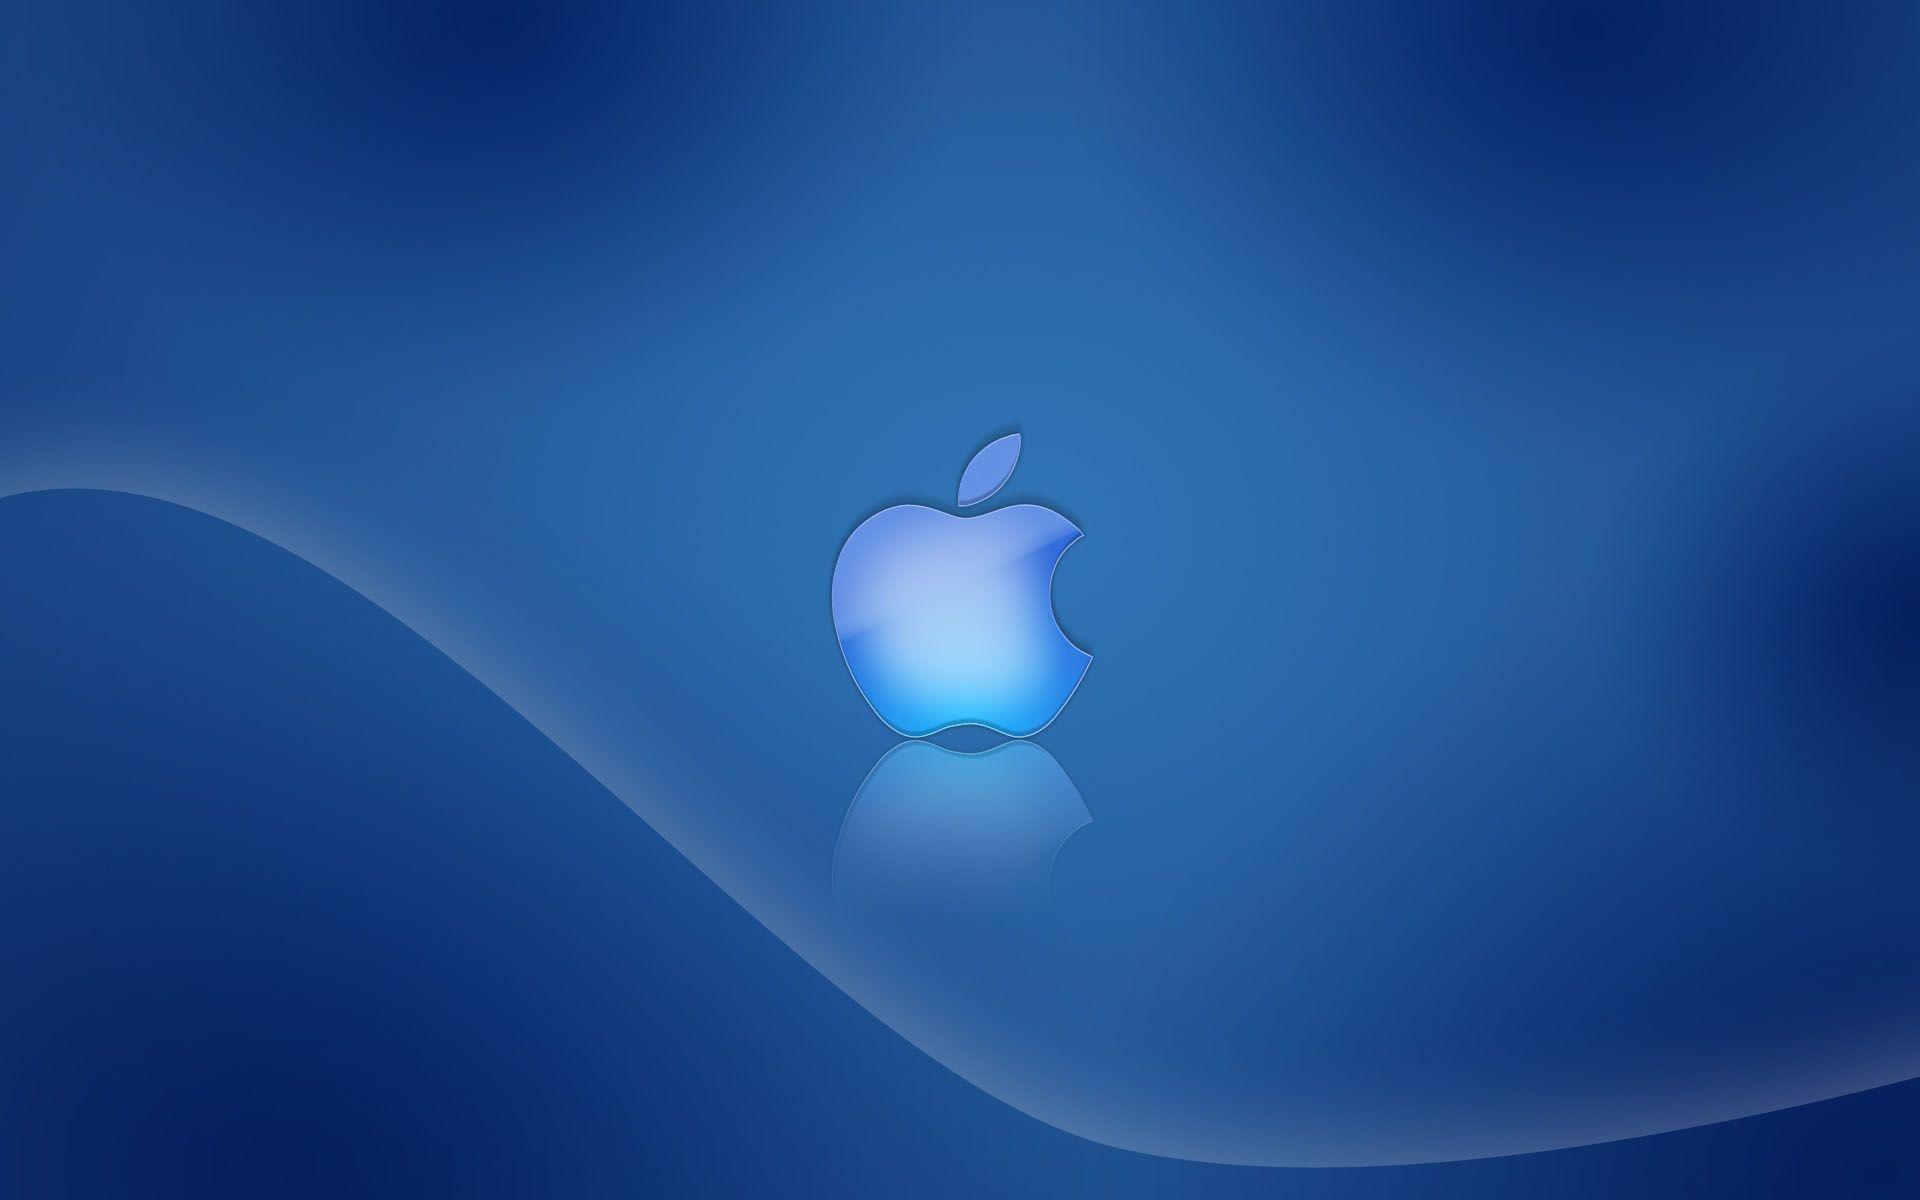 HD Wallpaper For Mac Best Apple Wallpaper Blue